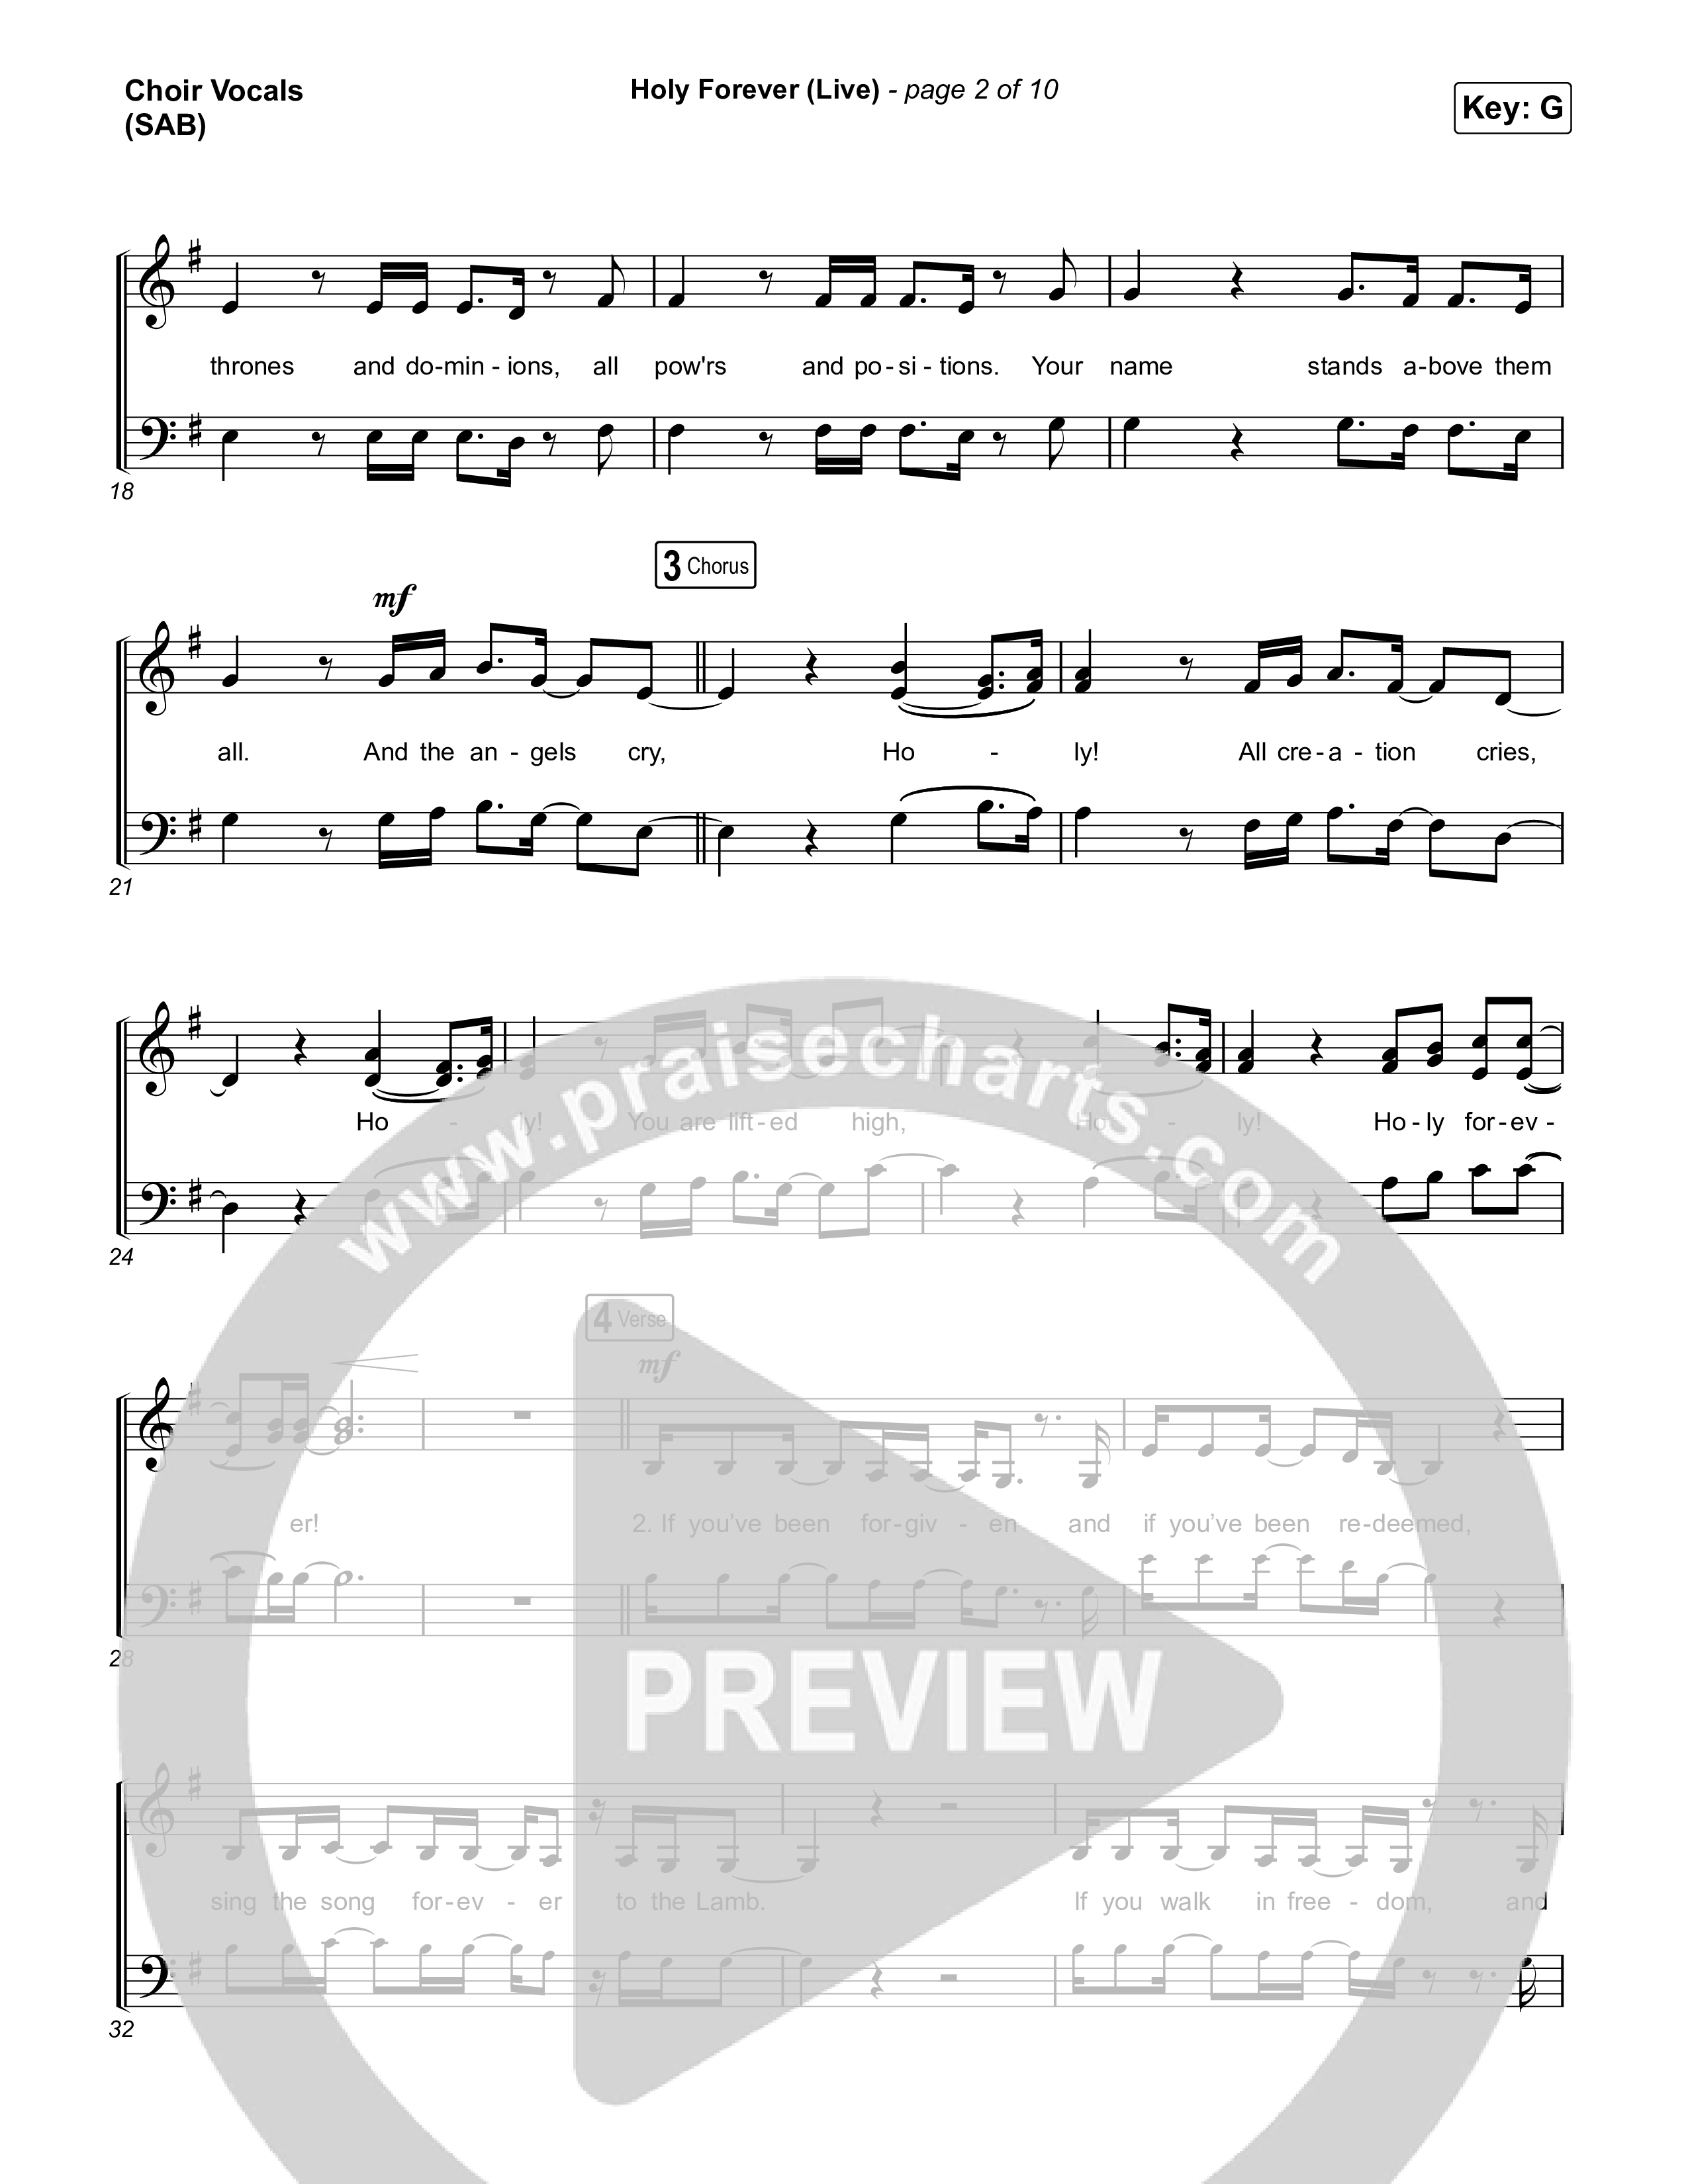 Holy Forever (Worship Choir/SAB) Choir Sheet (SAB) (CeCe Winans / Arr. Luke Gambill)